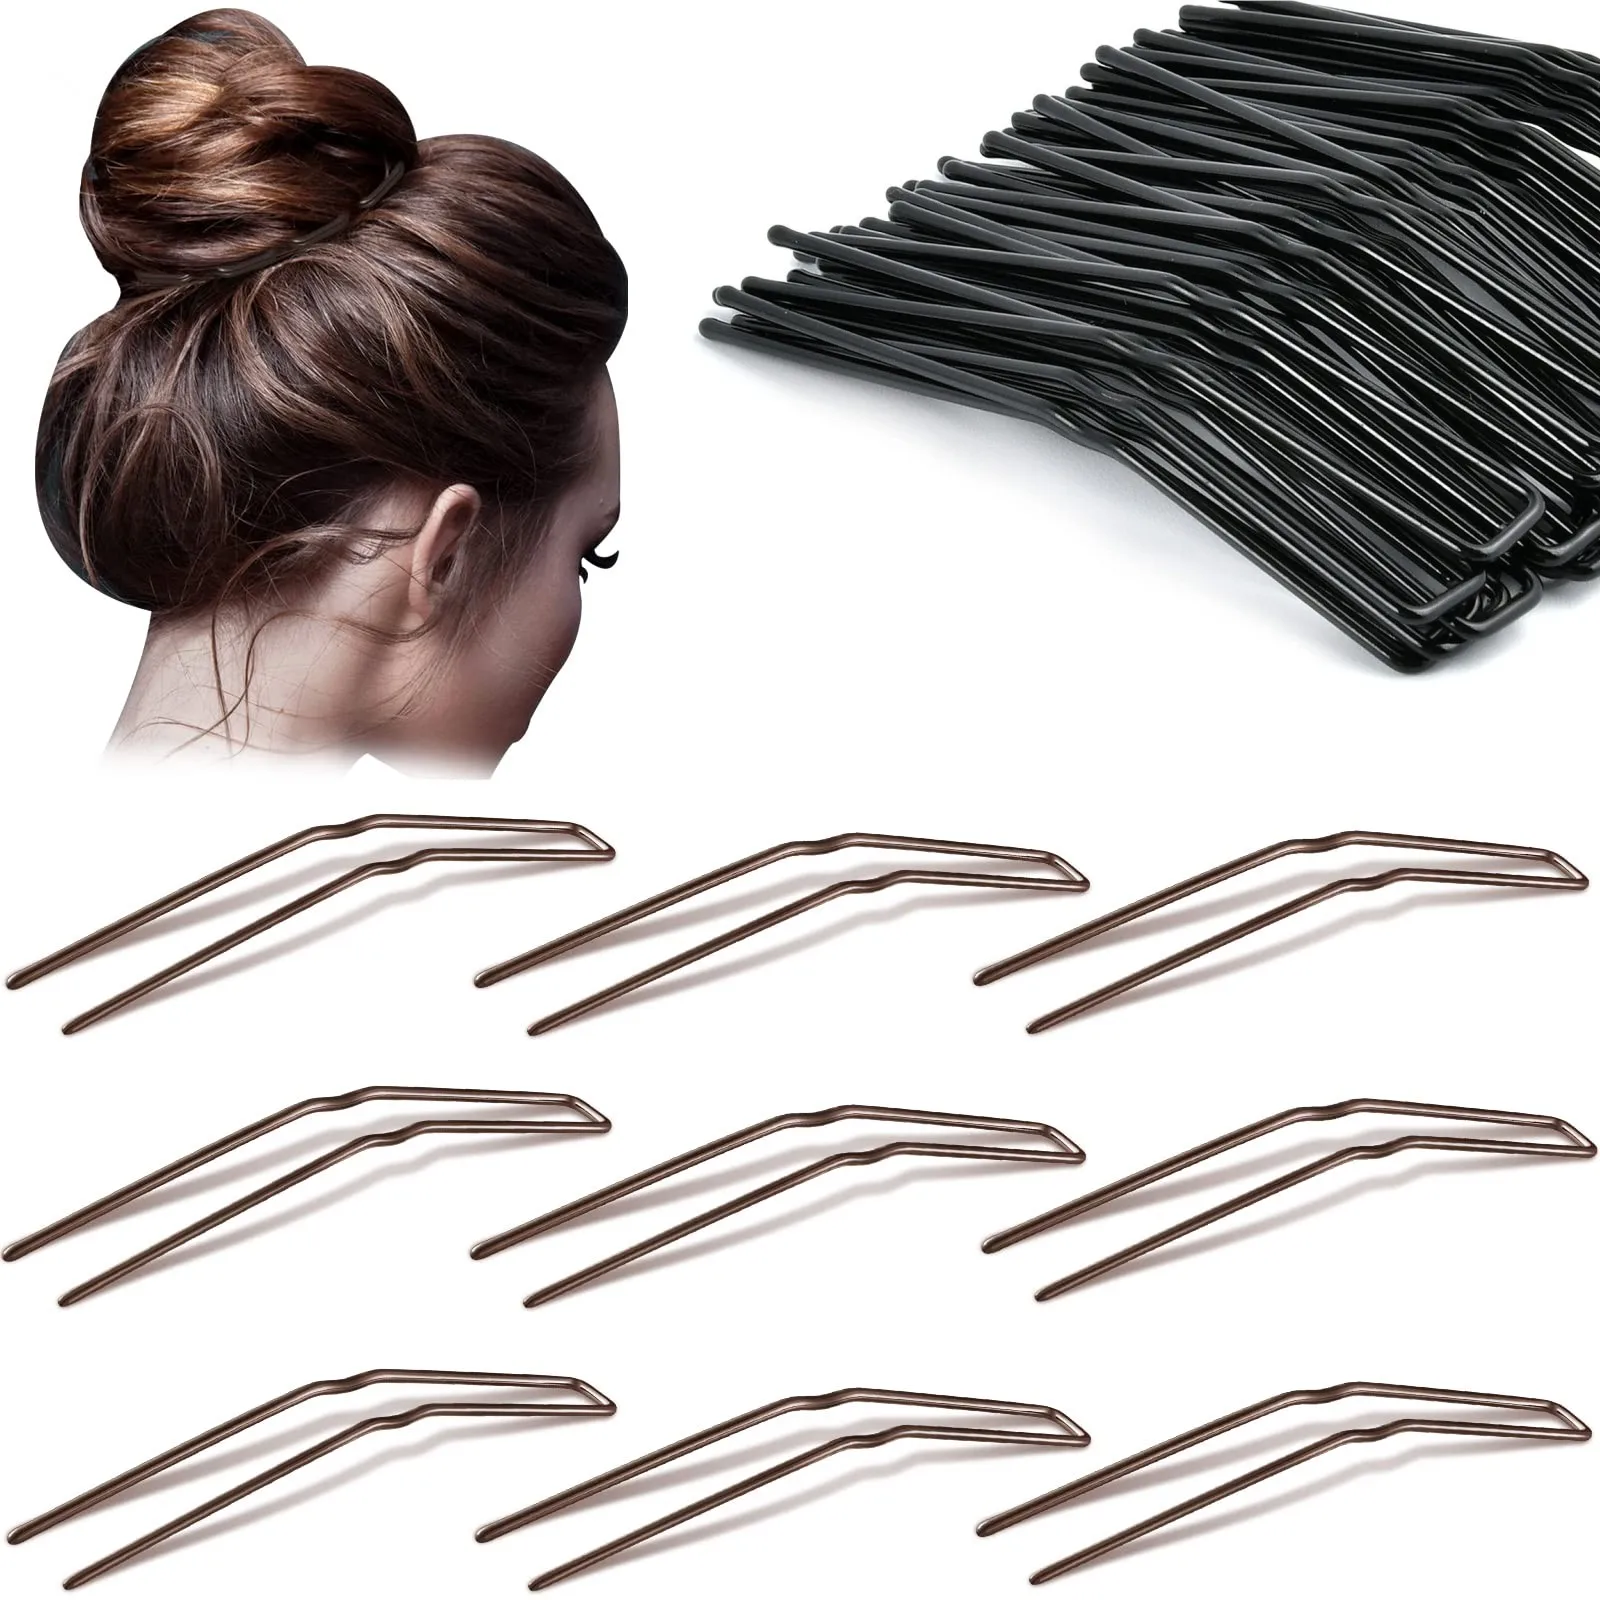 

12pcs Hairpins U Shaped Ballet Bobby Pins Hair Styling Pins for Updo Metal U Bun Hair Clips for Women Girls All Hair Types